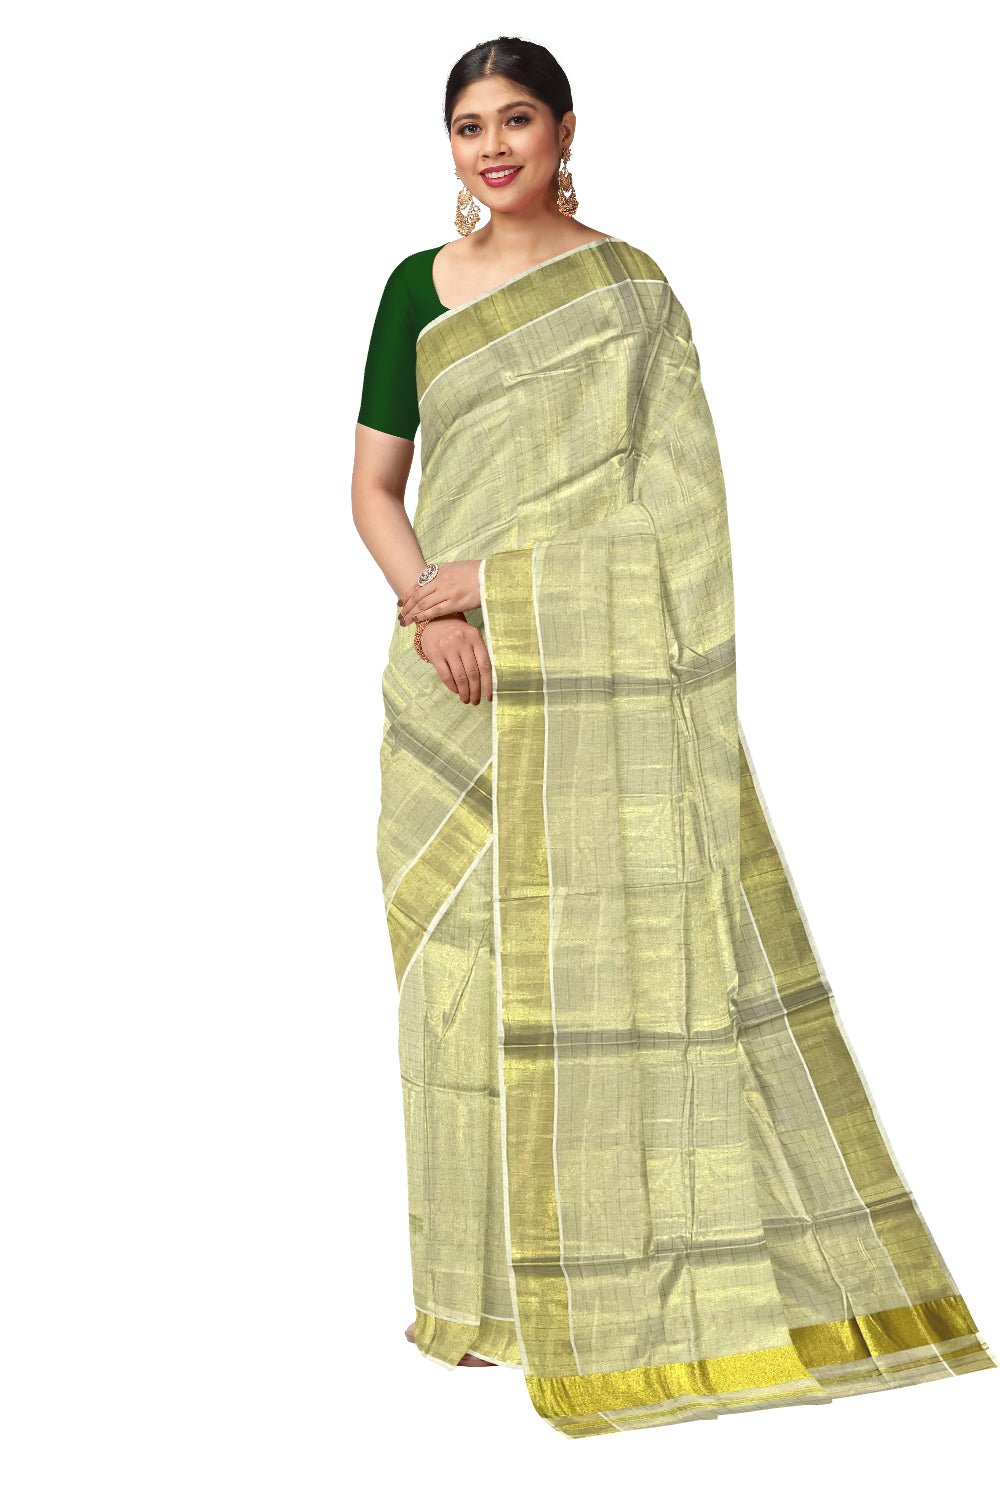 Kerala Tissue Kasavu Check Design Saree with 3 Inch Border